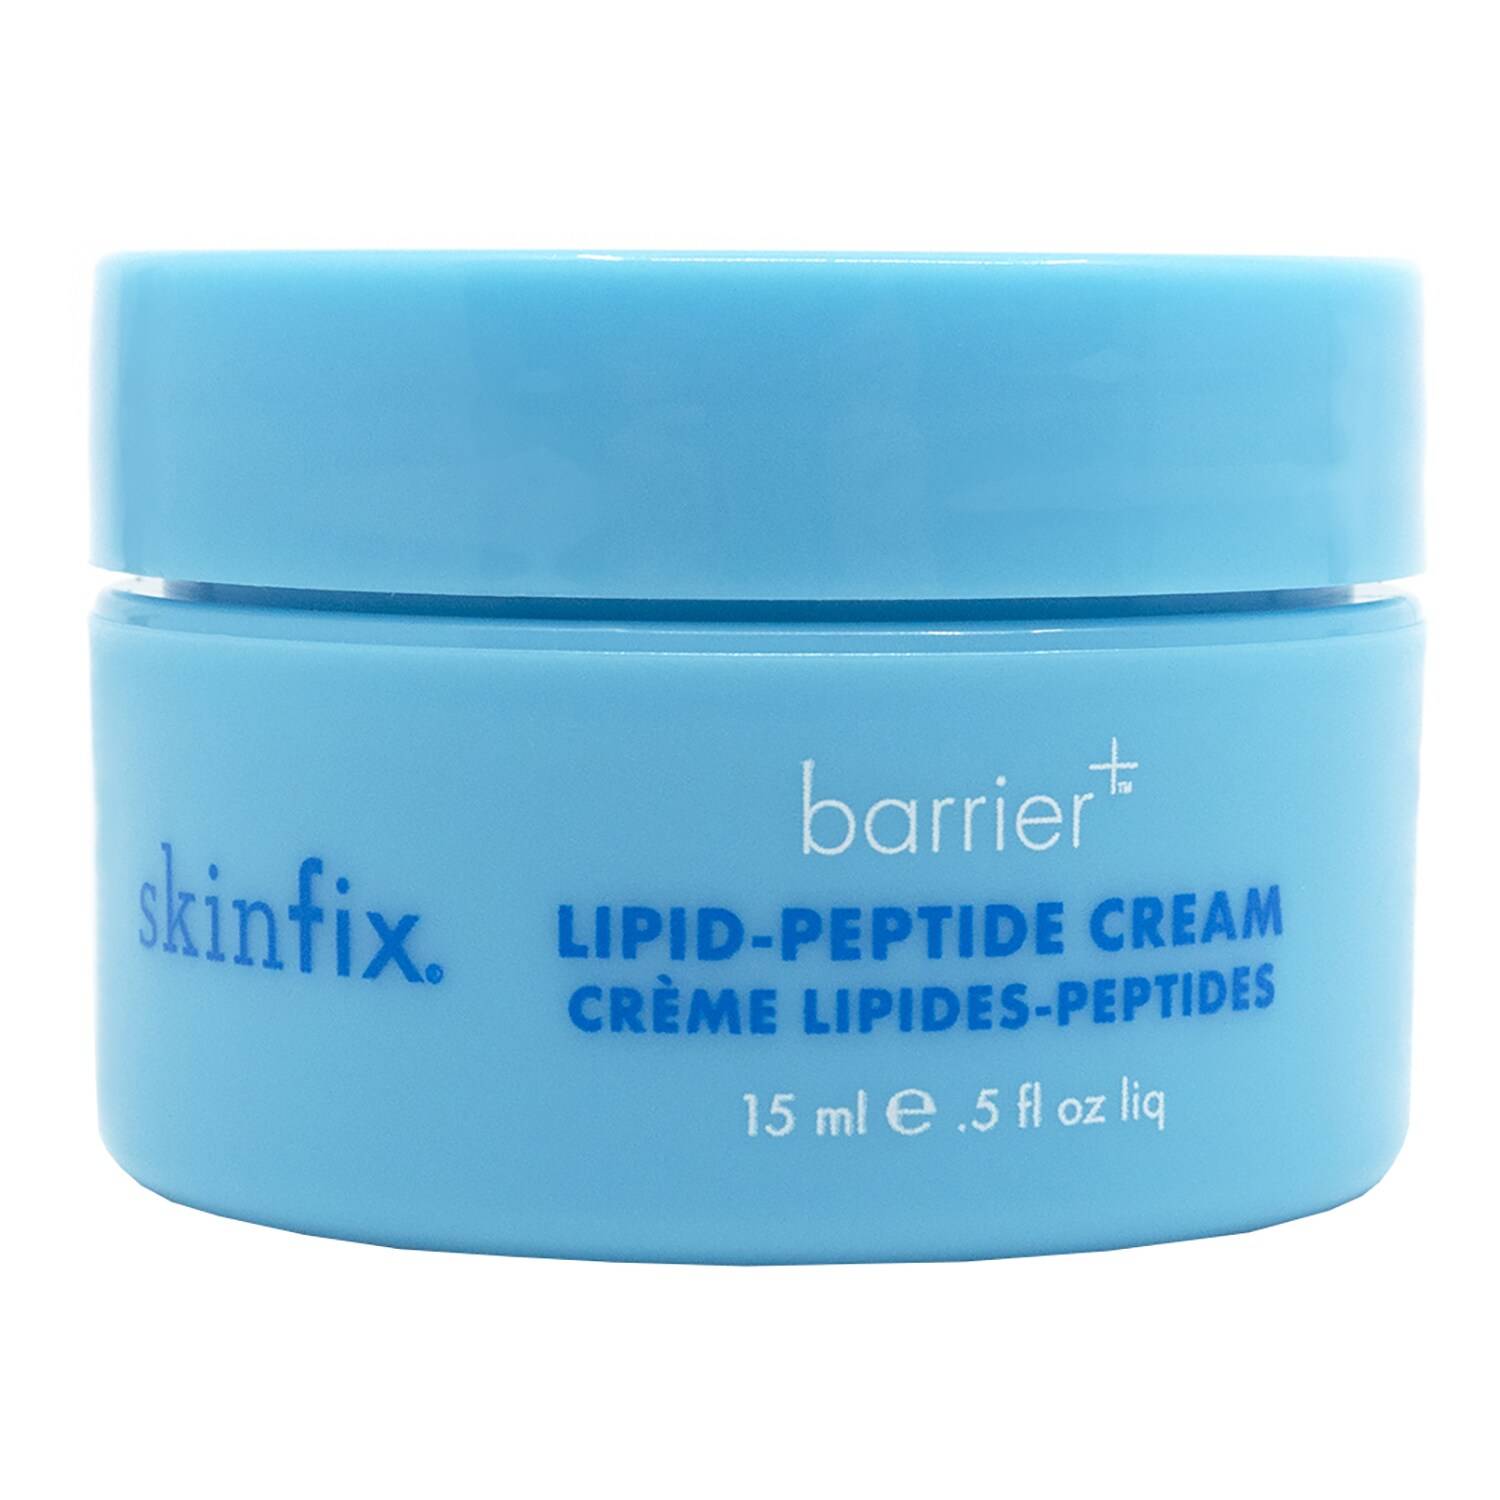 Skinfix Barrier+ Triple Lipid-Peptide Cream 15Ml